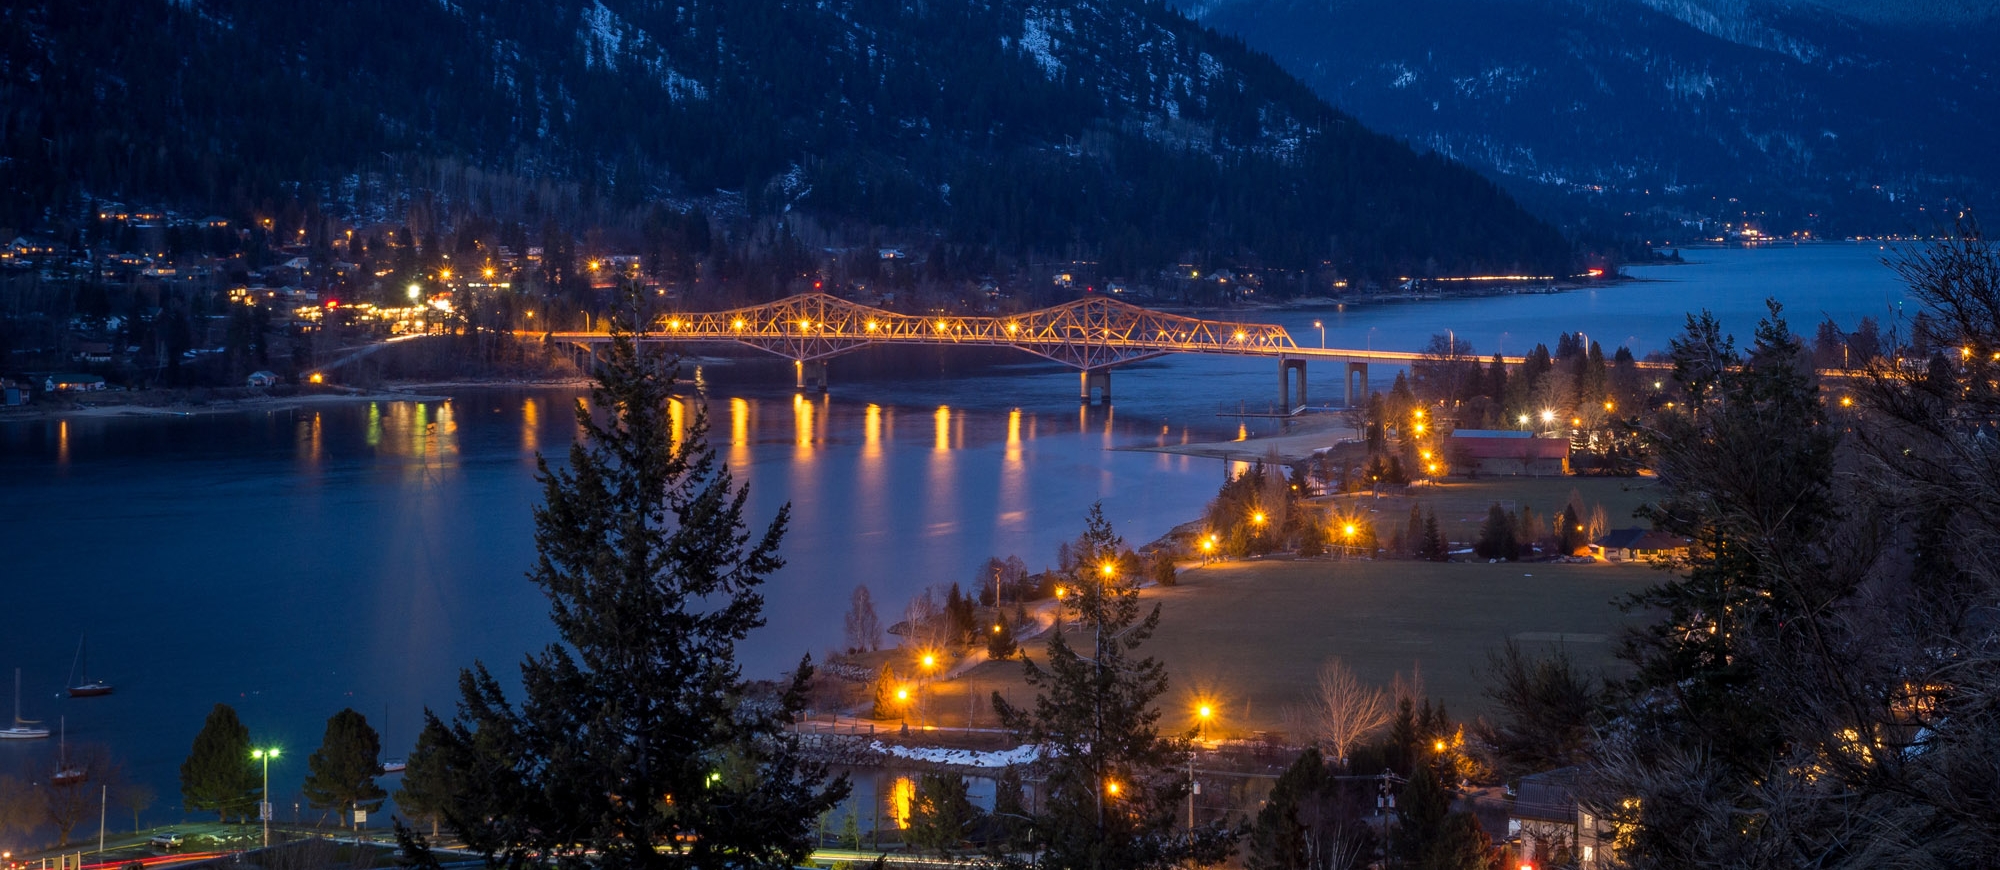 Nelson, BC and the Big Orange Bridge lit up at night.